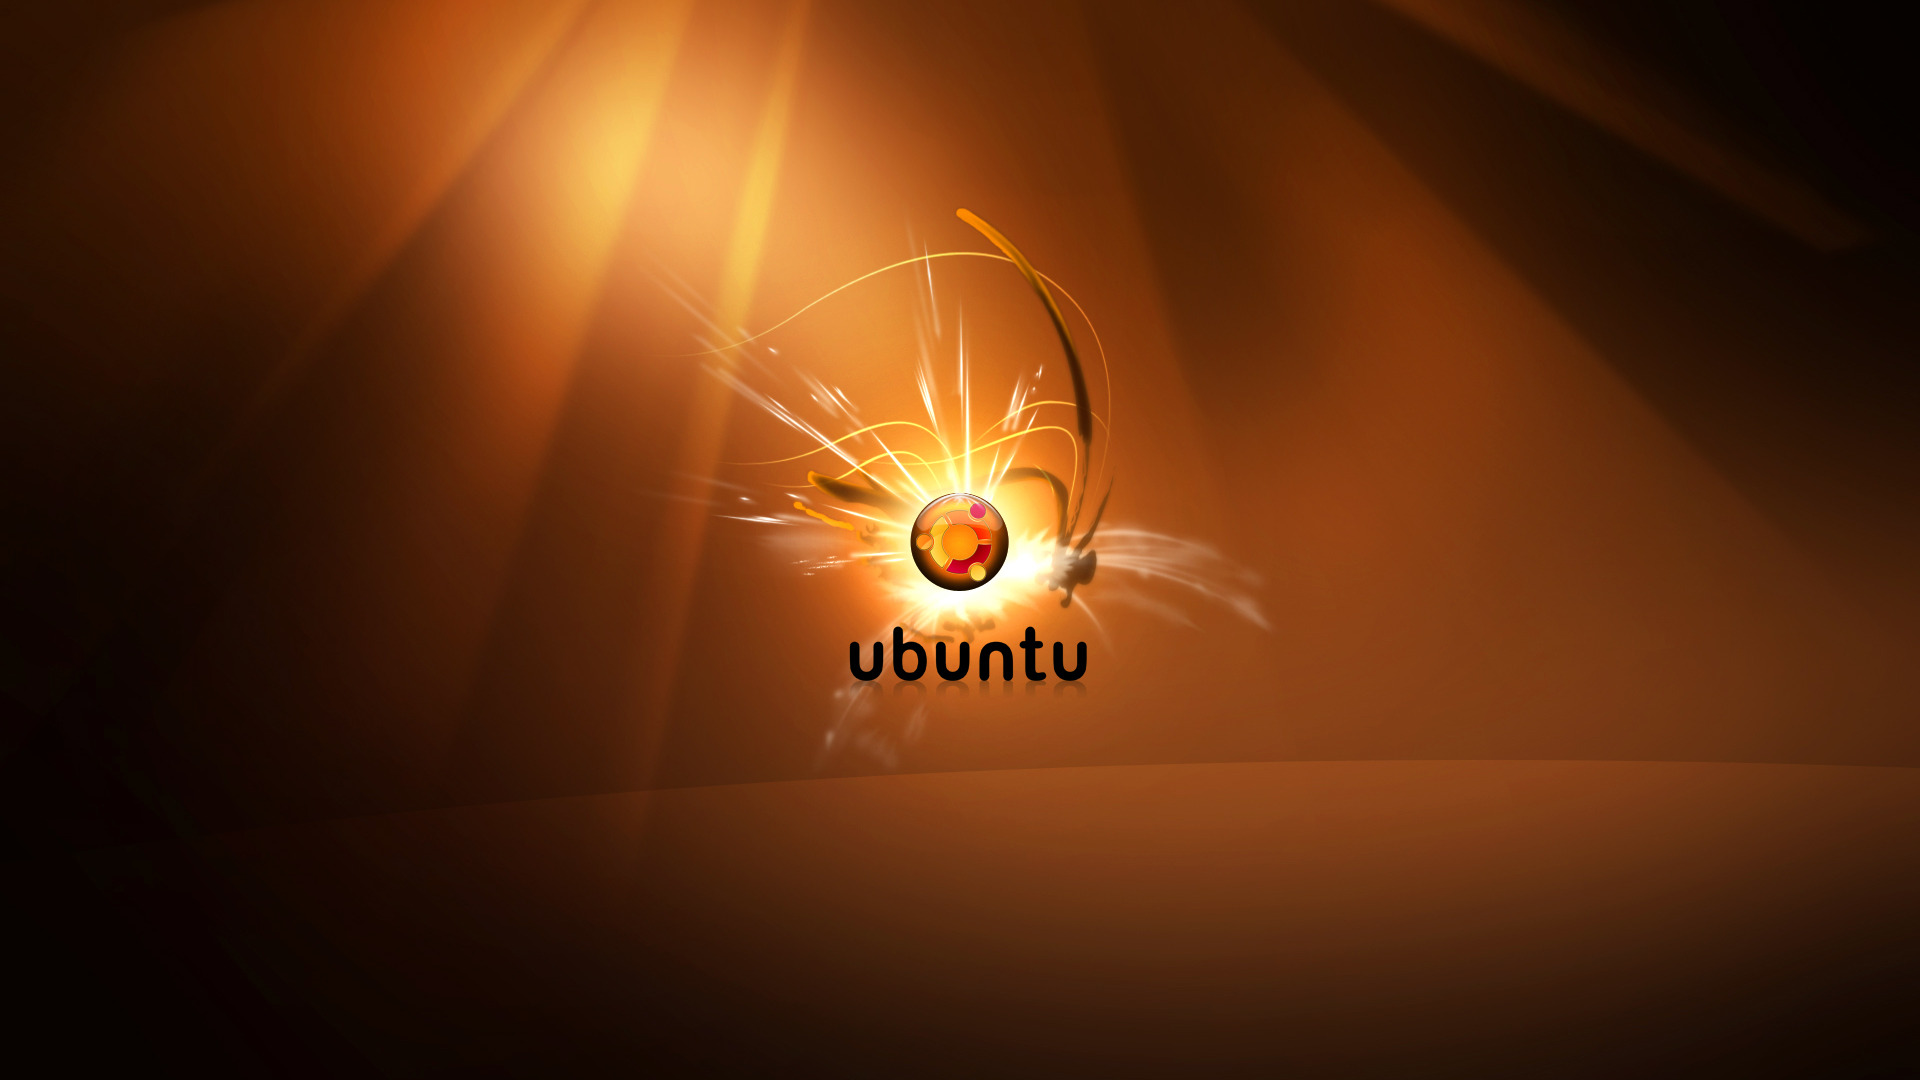 ubuntu wallpaper glow